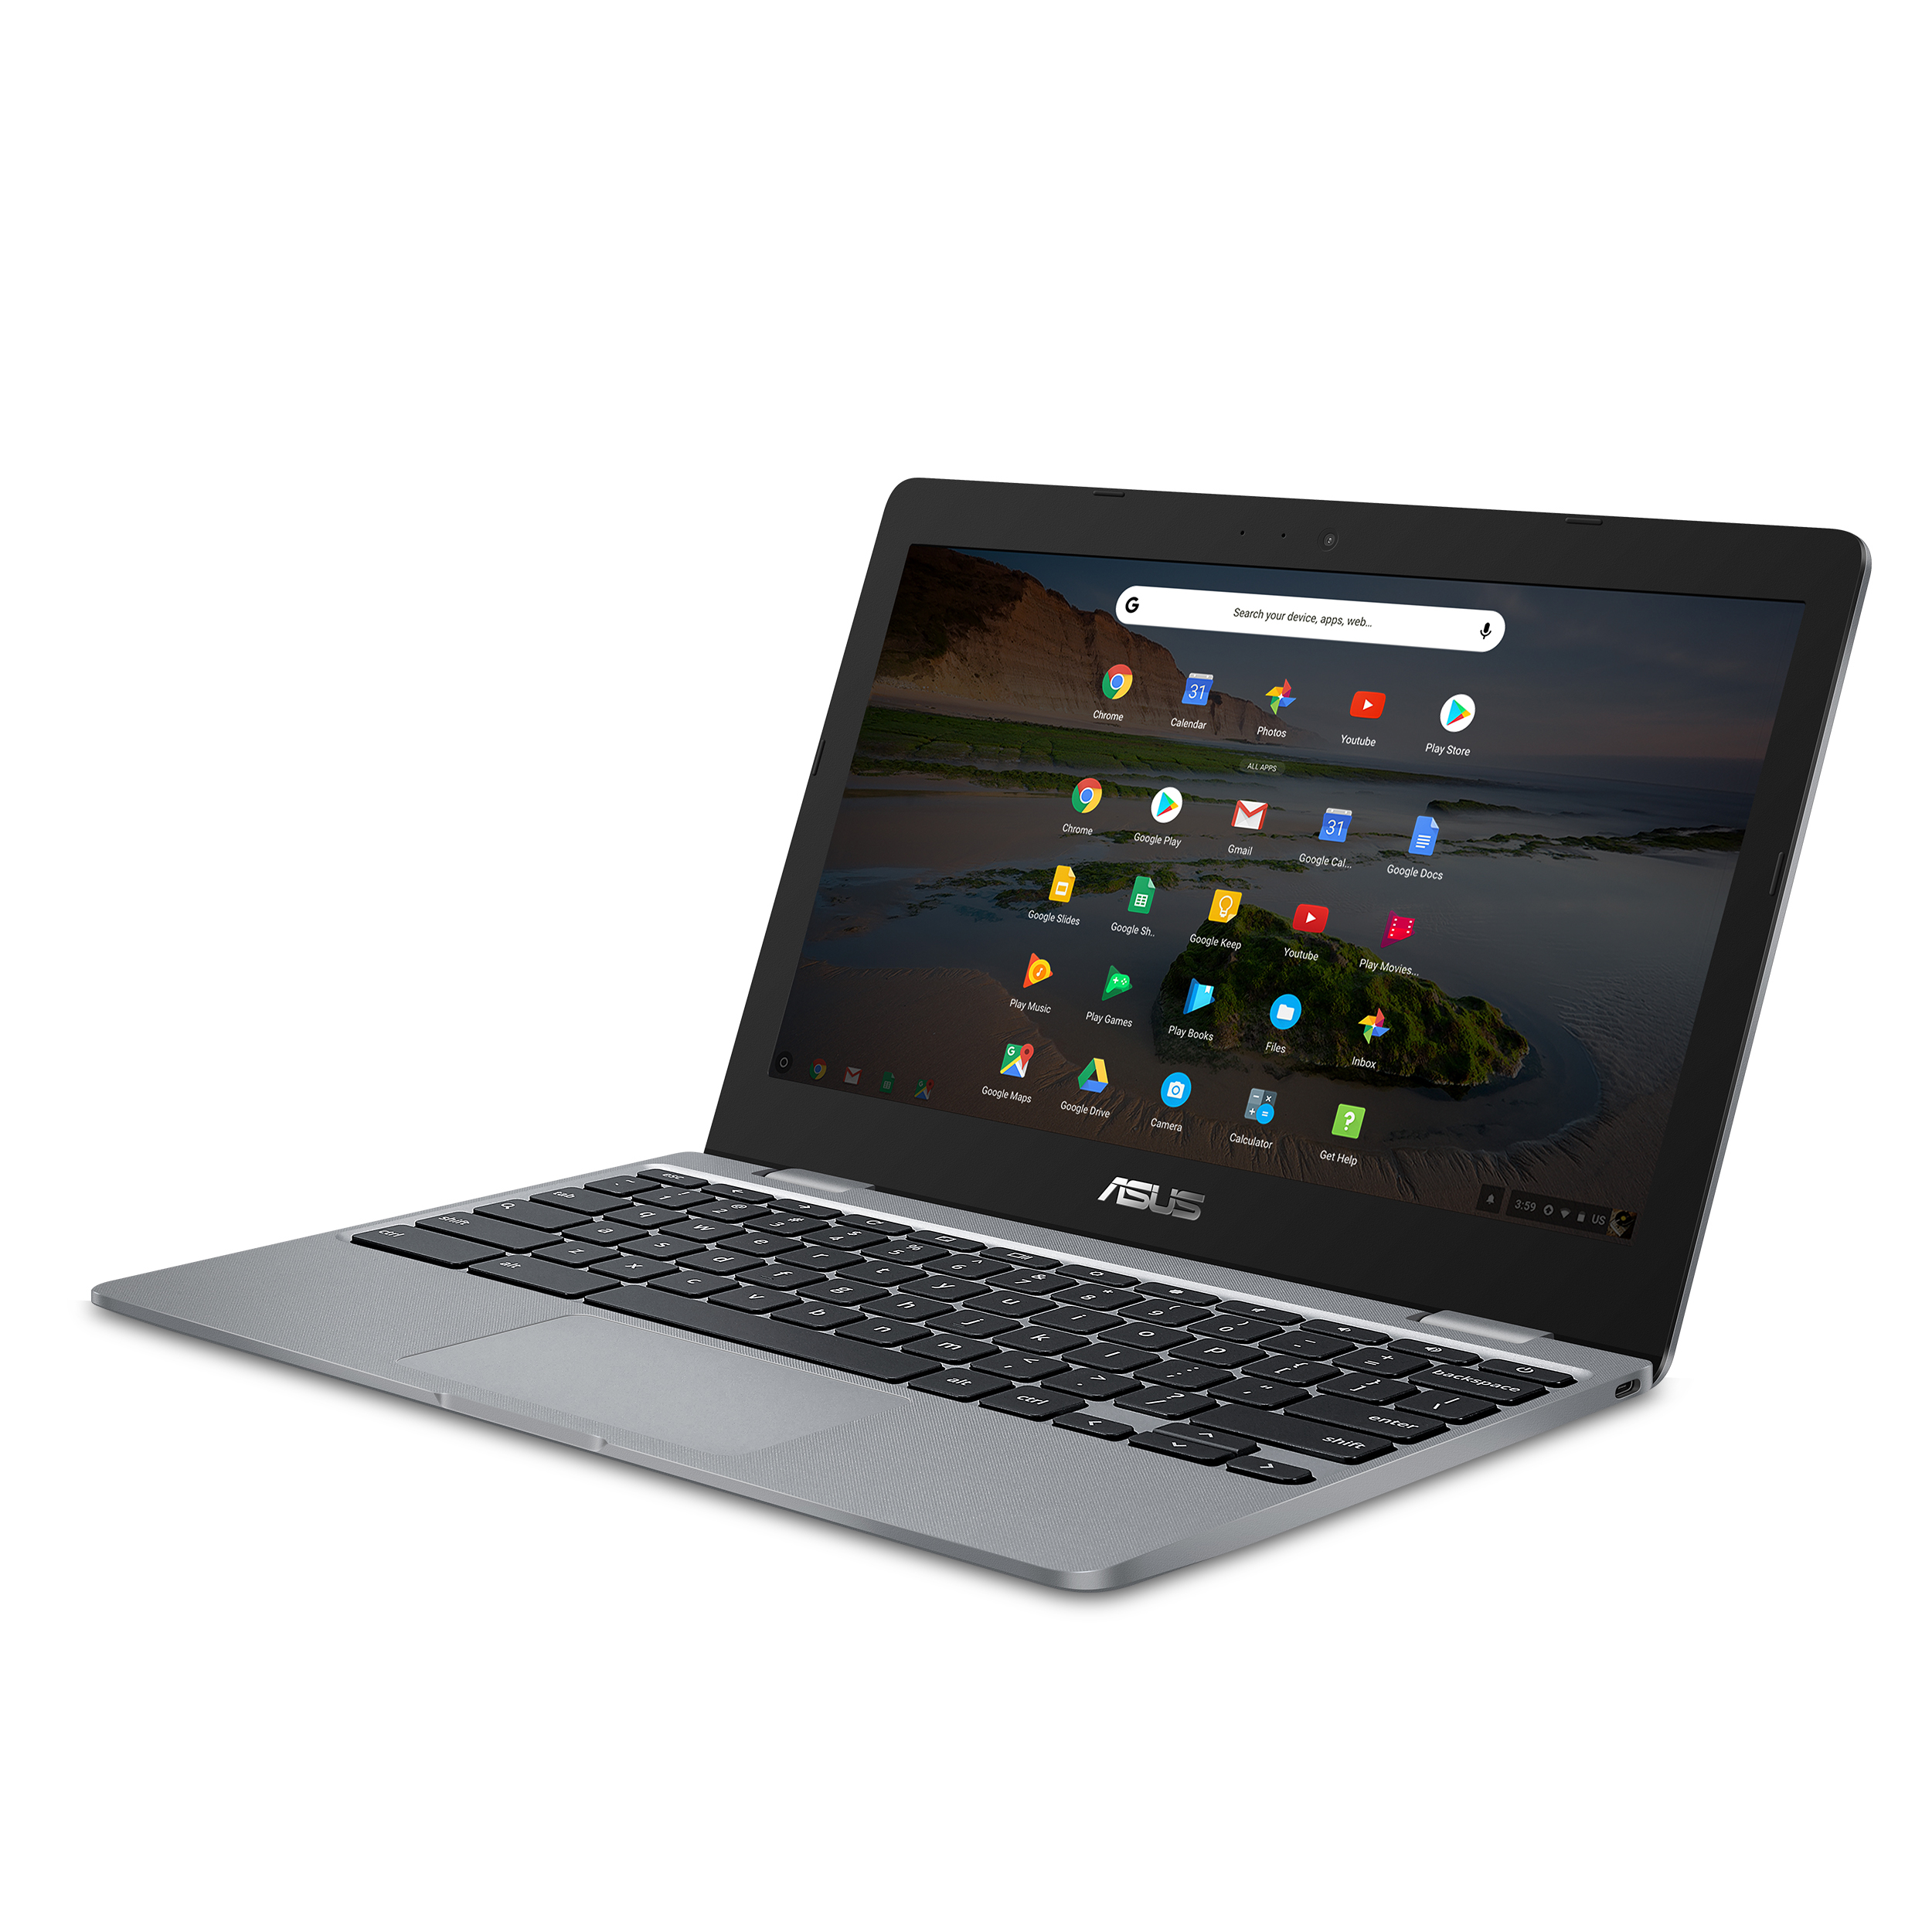 ASUS C223NA Chromebook, 11.6" Intel Celeron N3350, 4GB RAM, 32GB eMMC, Chrome OS, Gray, C223NA-DH02 - image 2 of 2